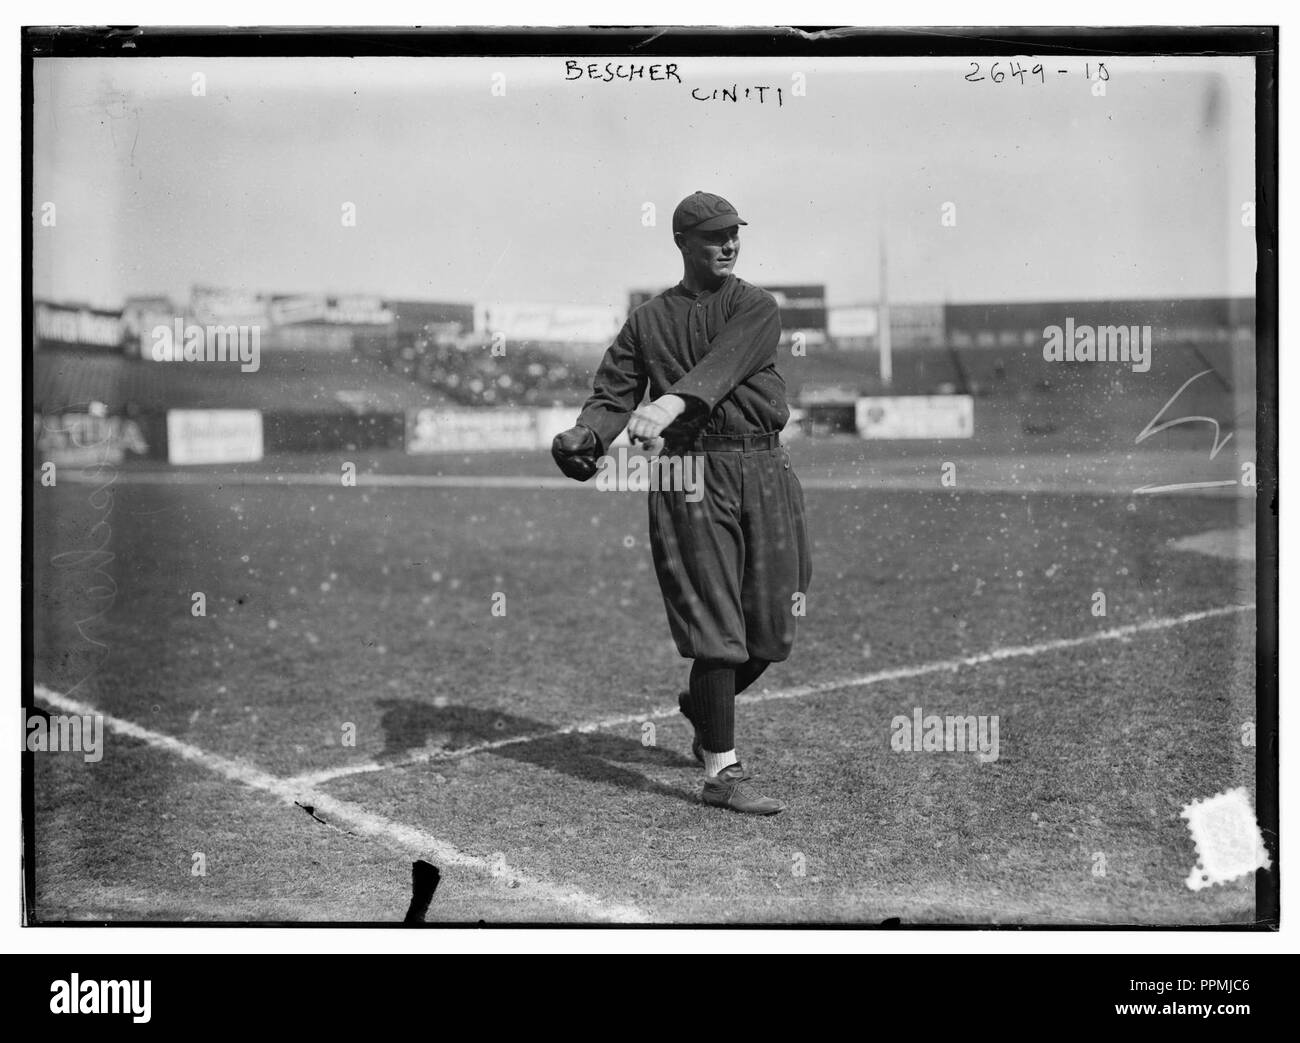 Bob Bescher, Cincinnati NL (baseball) Stock Photo